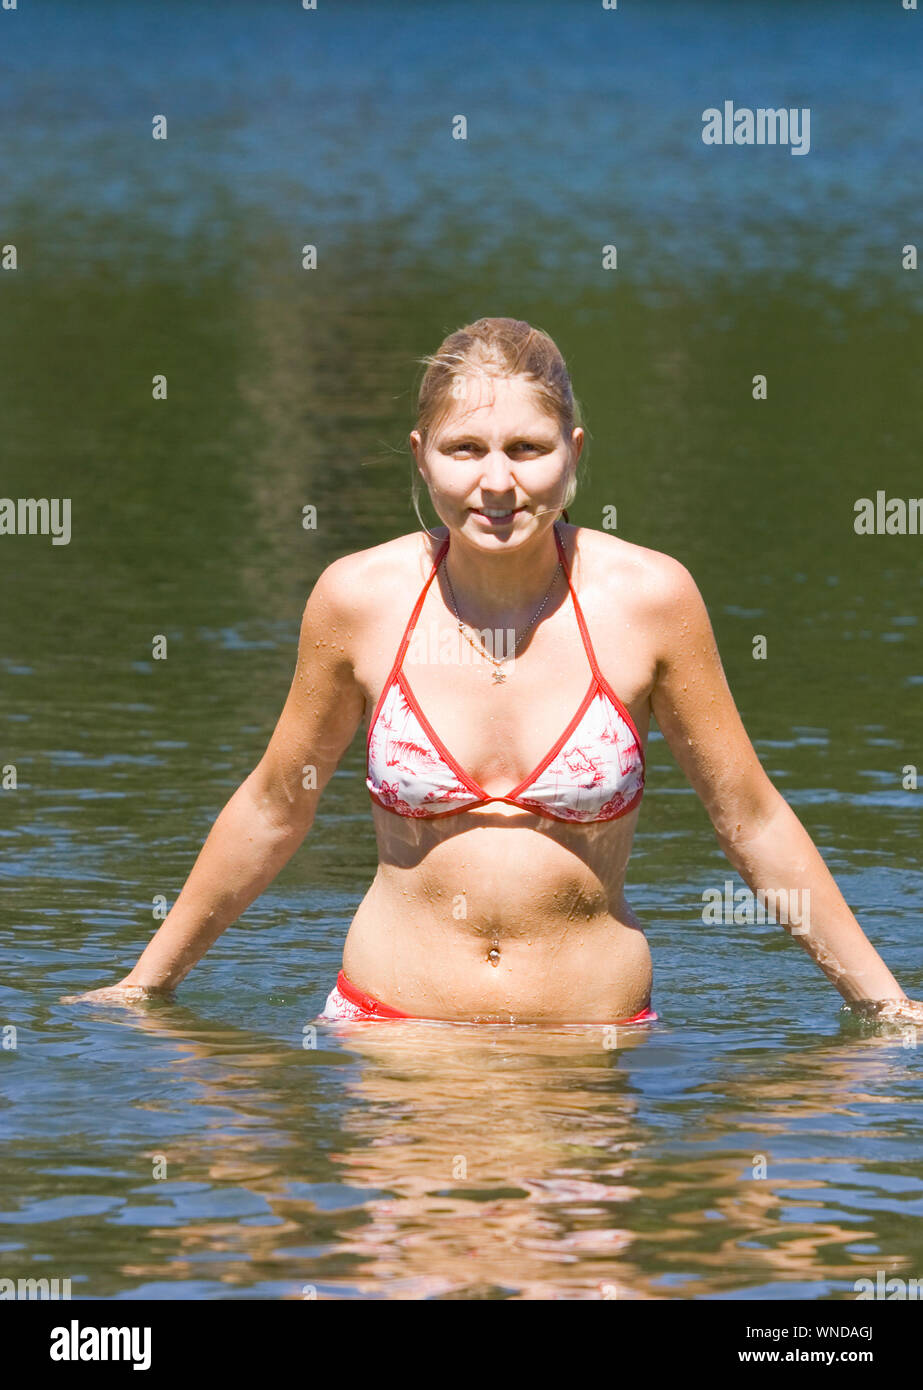 Woman lake wet bikini hi-res stock photography and images - Alamy